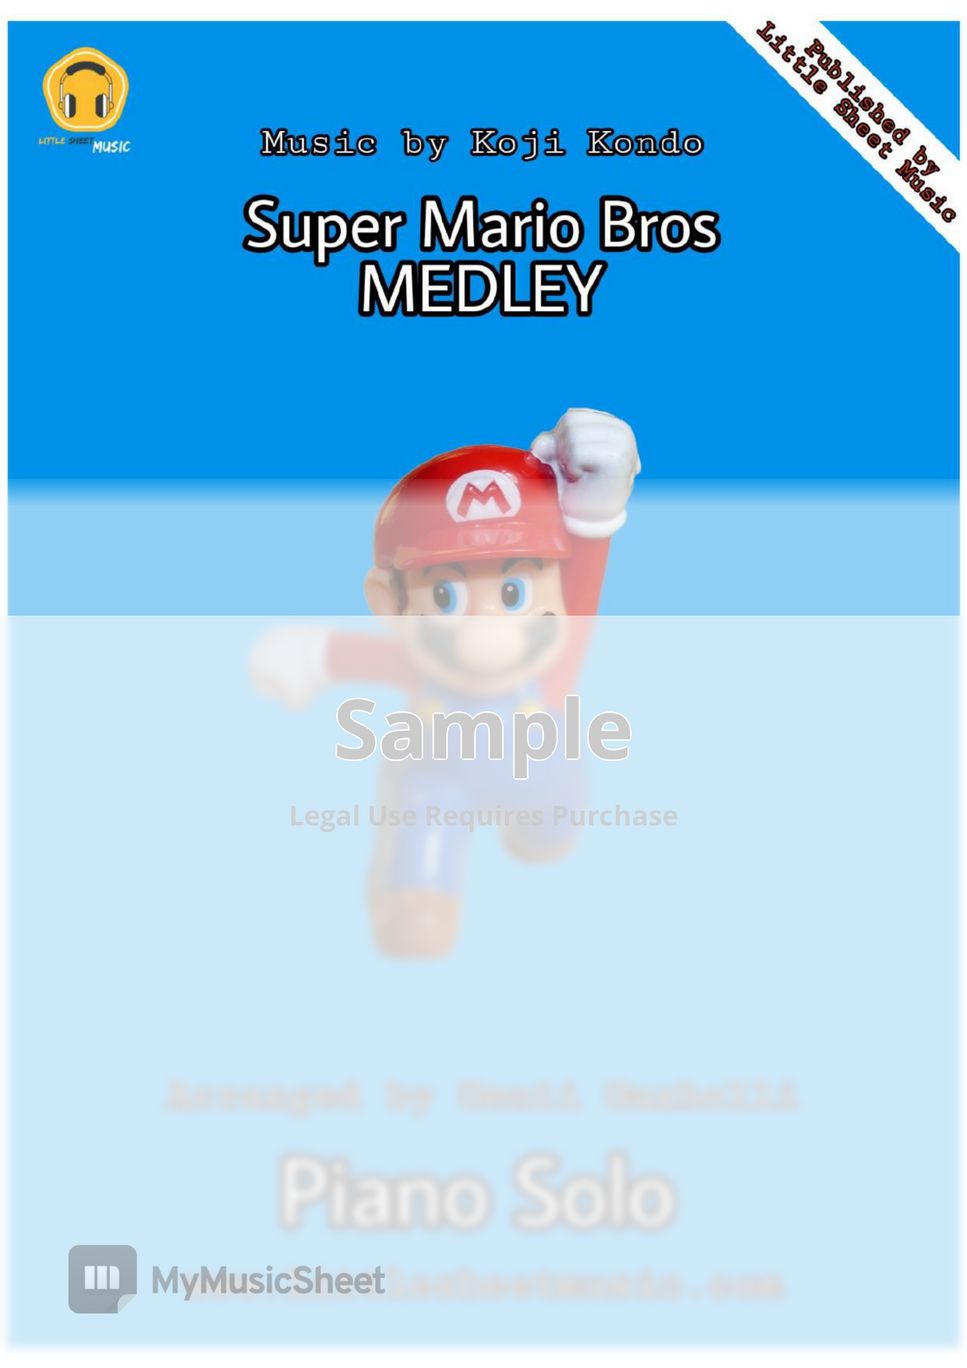 Koji Kondo - Super Mario Bros MEDLEY by Genti Guxholli